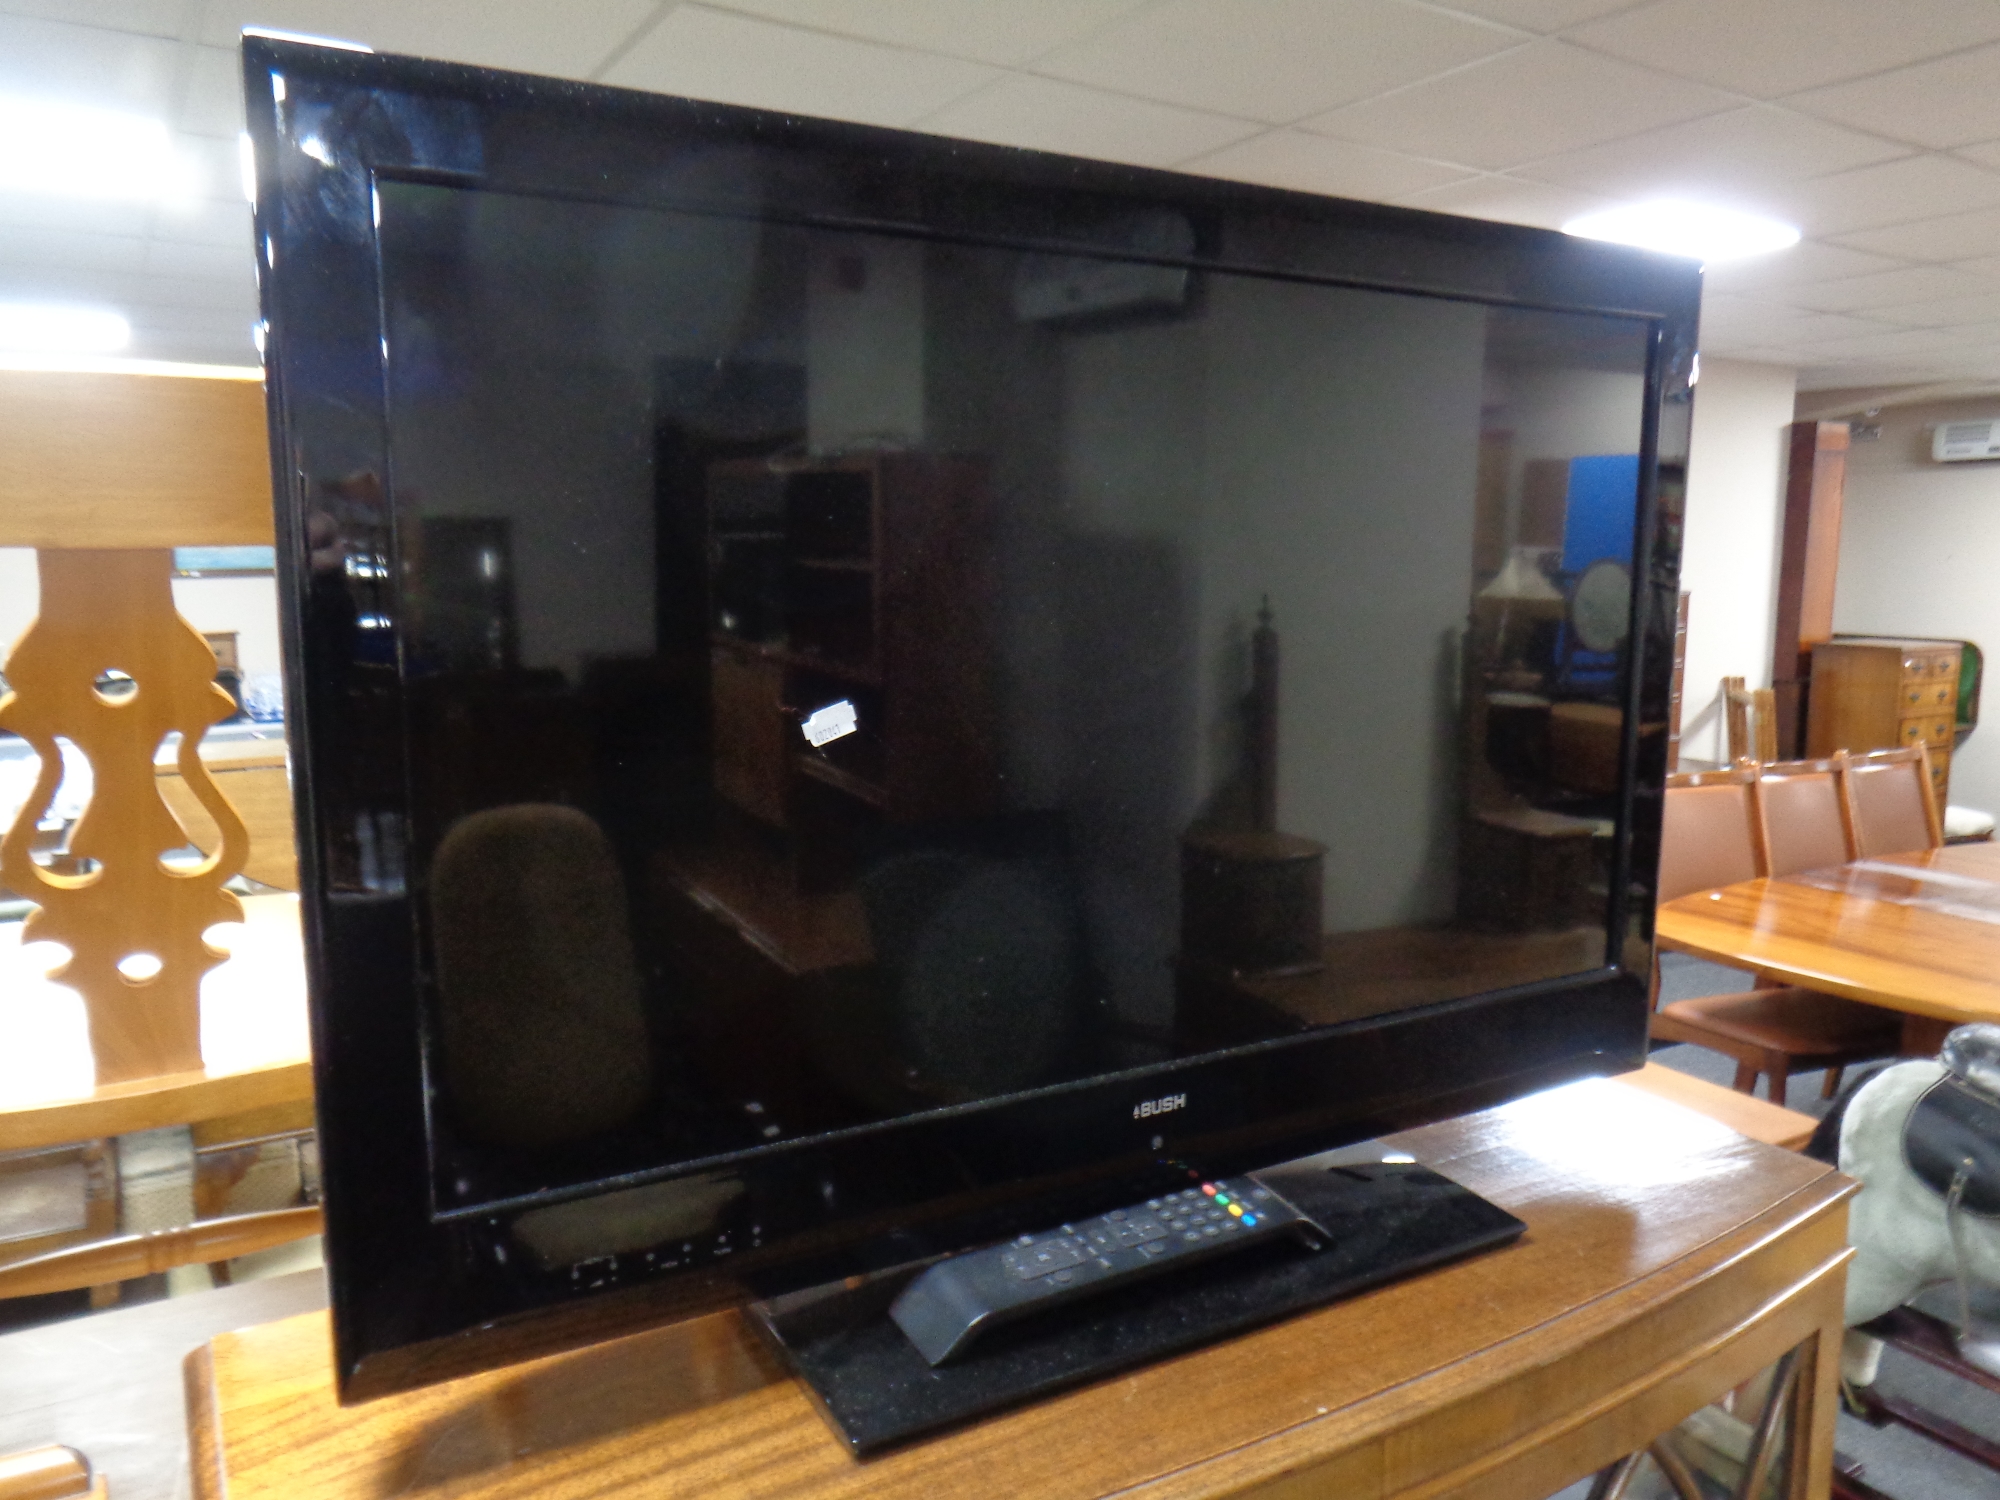 A Bush 32'' LCD TV with remote